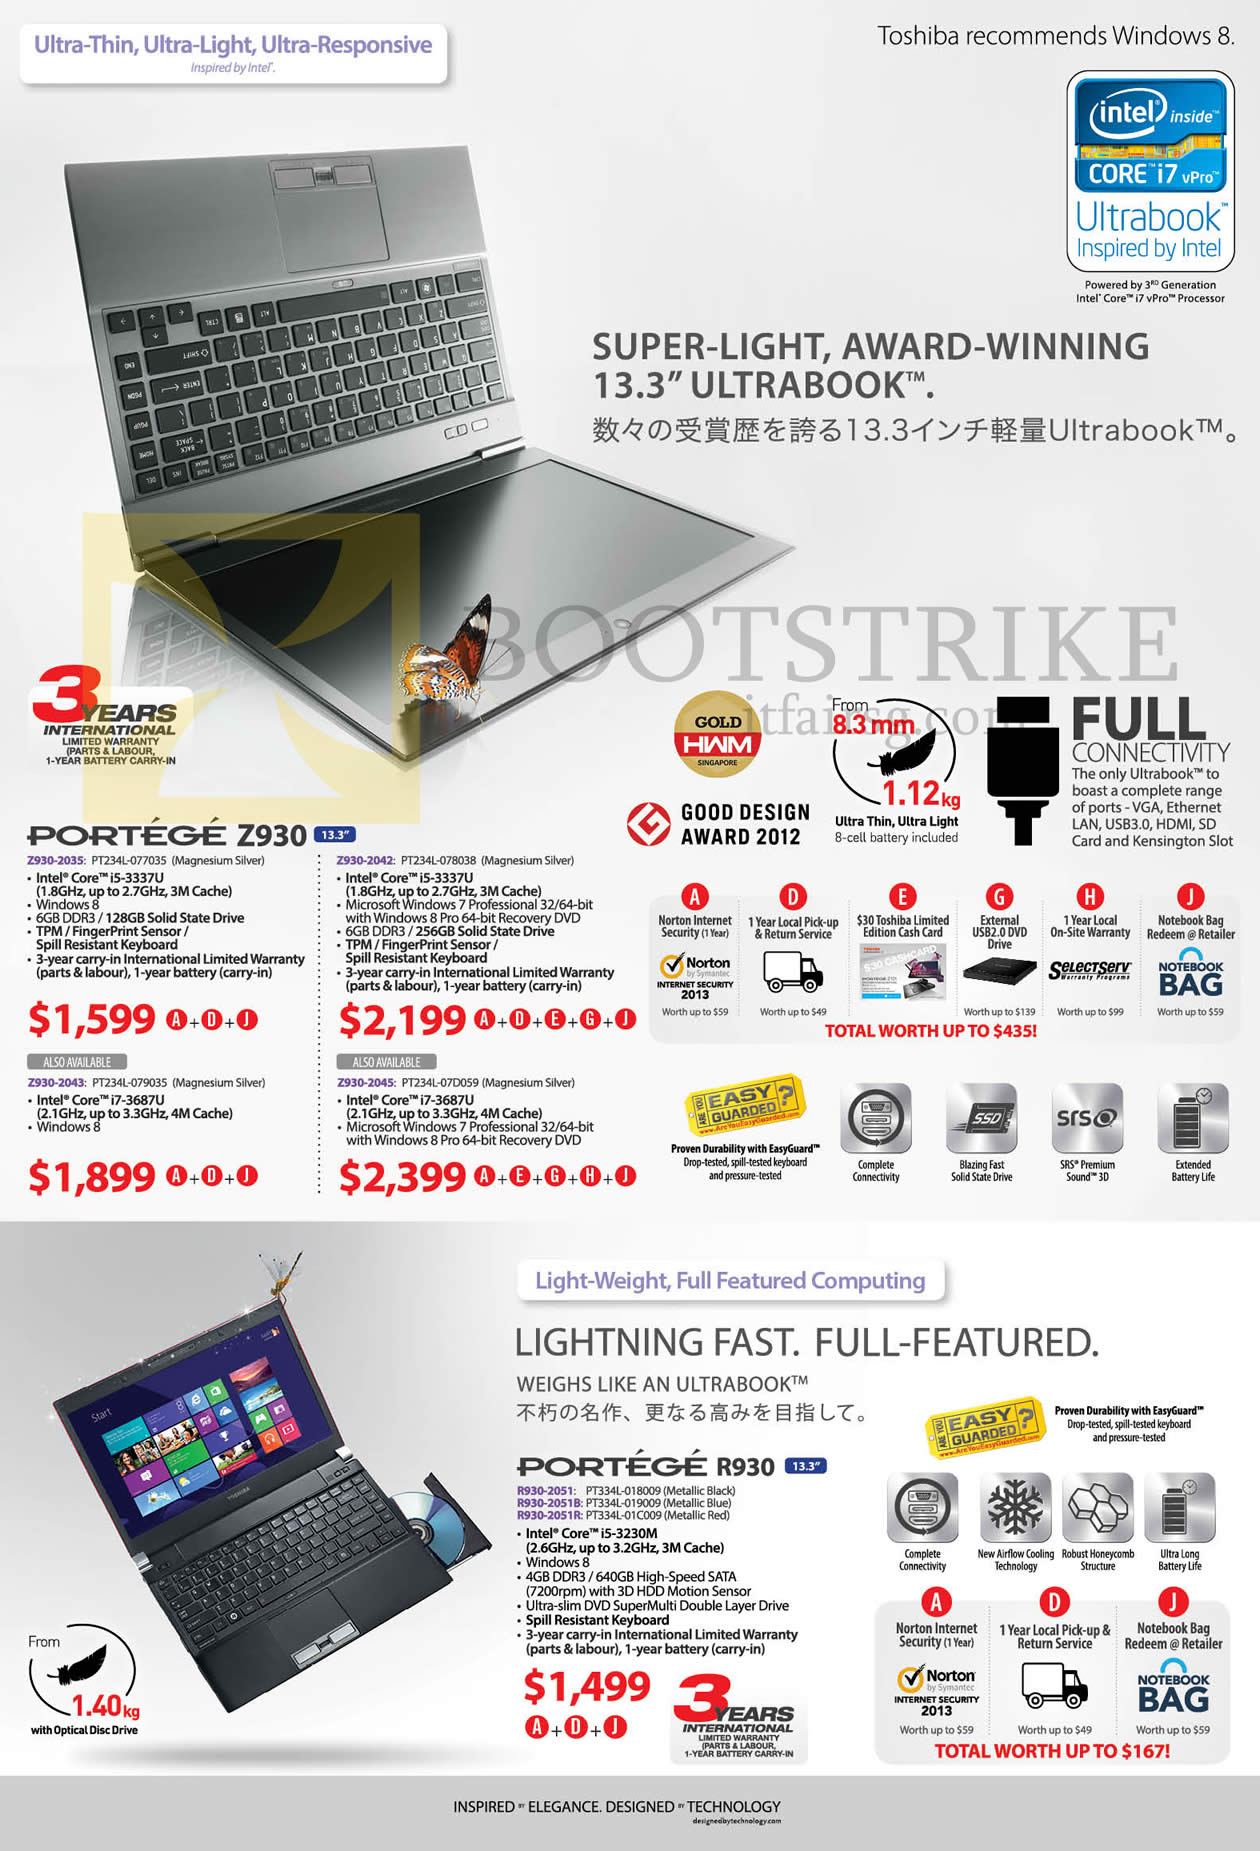 COMEX 2013 price list image brochure of Toshiba Notebooks Portege Z930 2035, 2042, 2043, 2045, R930 2051